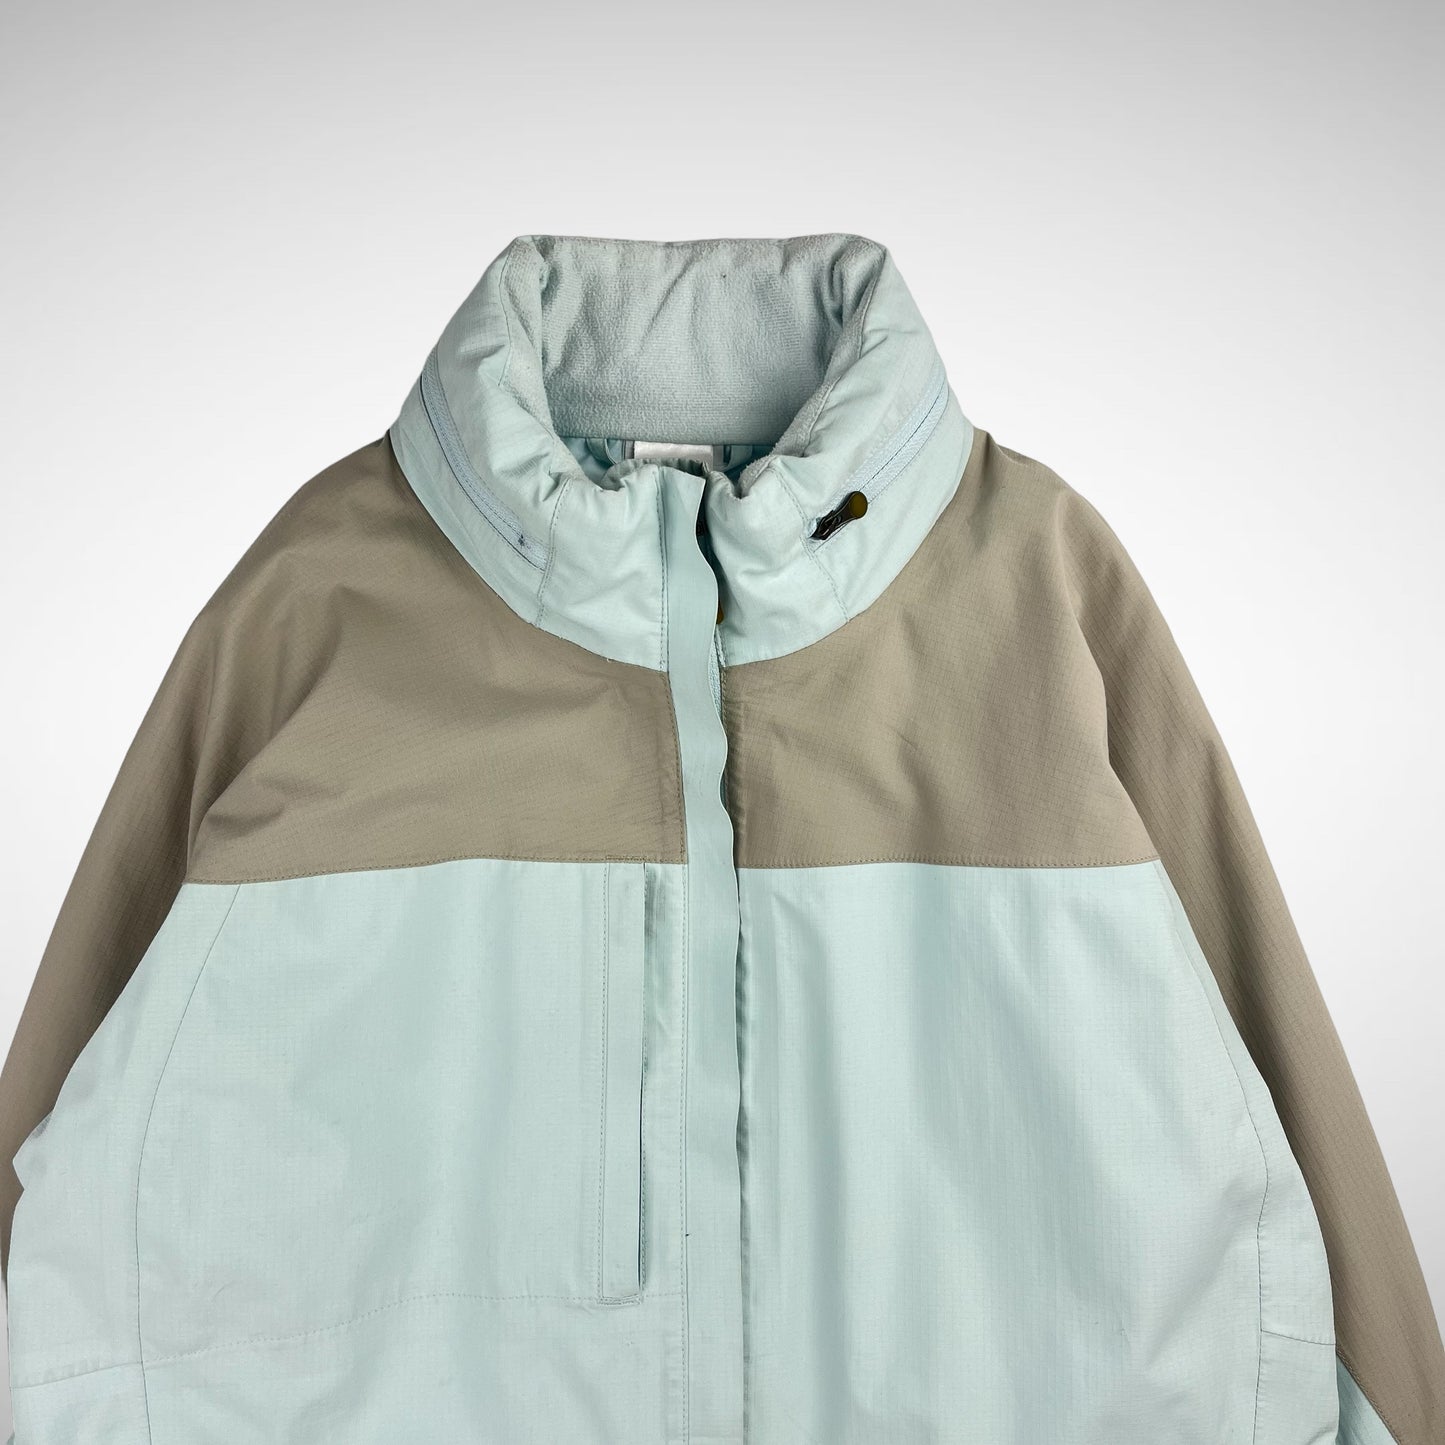 Adidas Clima-Proof Gore-Tex ‘Sample’ Jacket (2000s)